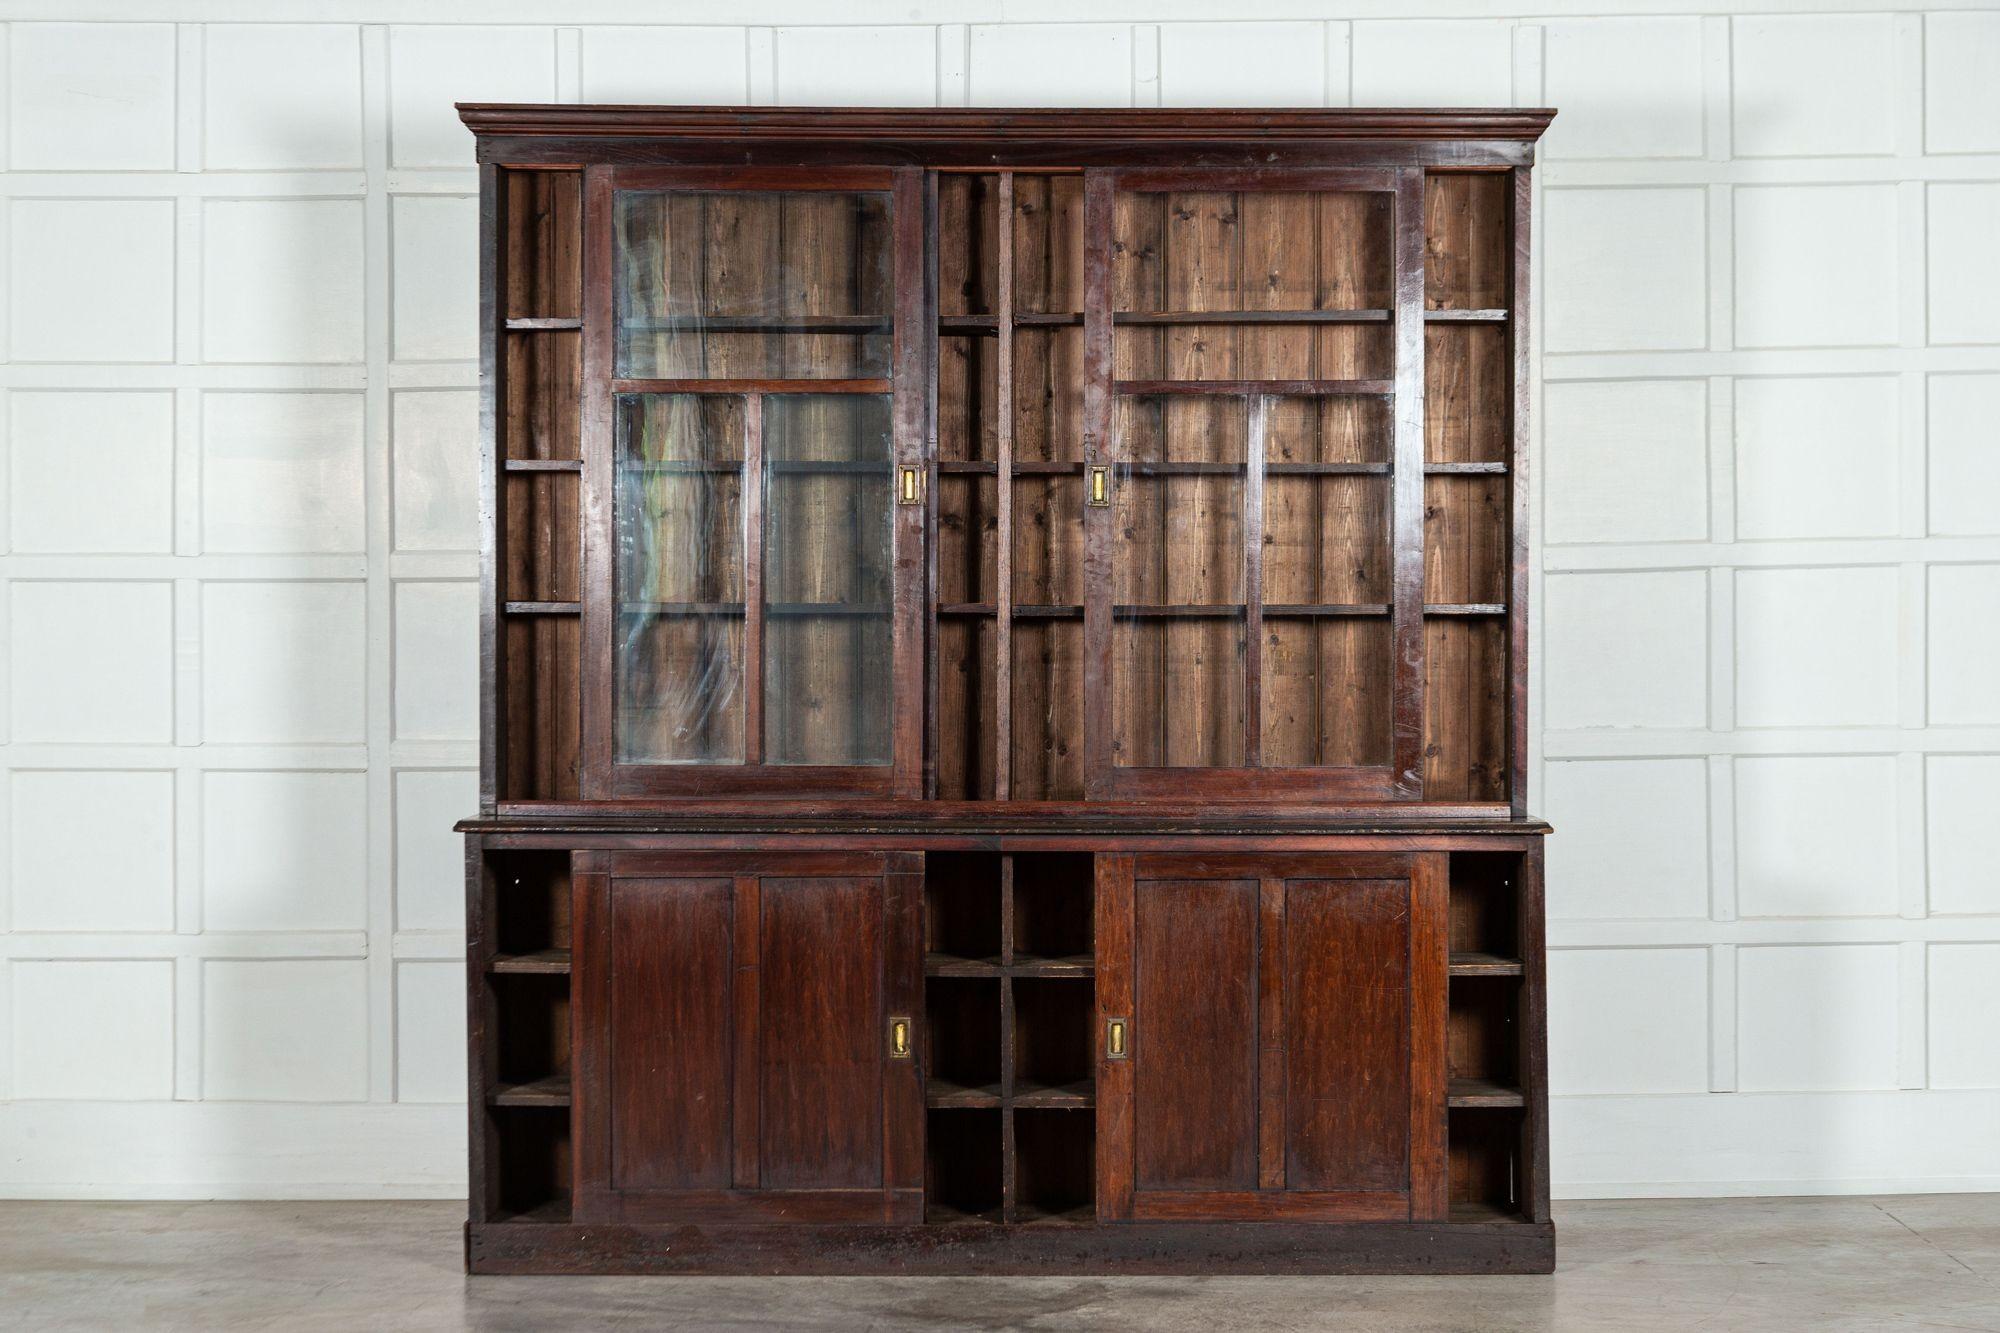 circa 1880
Large 19th Century English Mahogany & Pine Haberdashery Glazed Cabinet
sku 1497
Together W212 x D51 x H225 cm
Base W207 x D51 x H87 cm
Top W212 x D32 x H138 cm